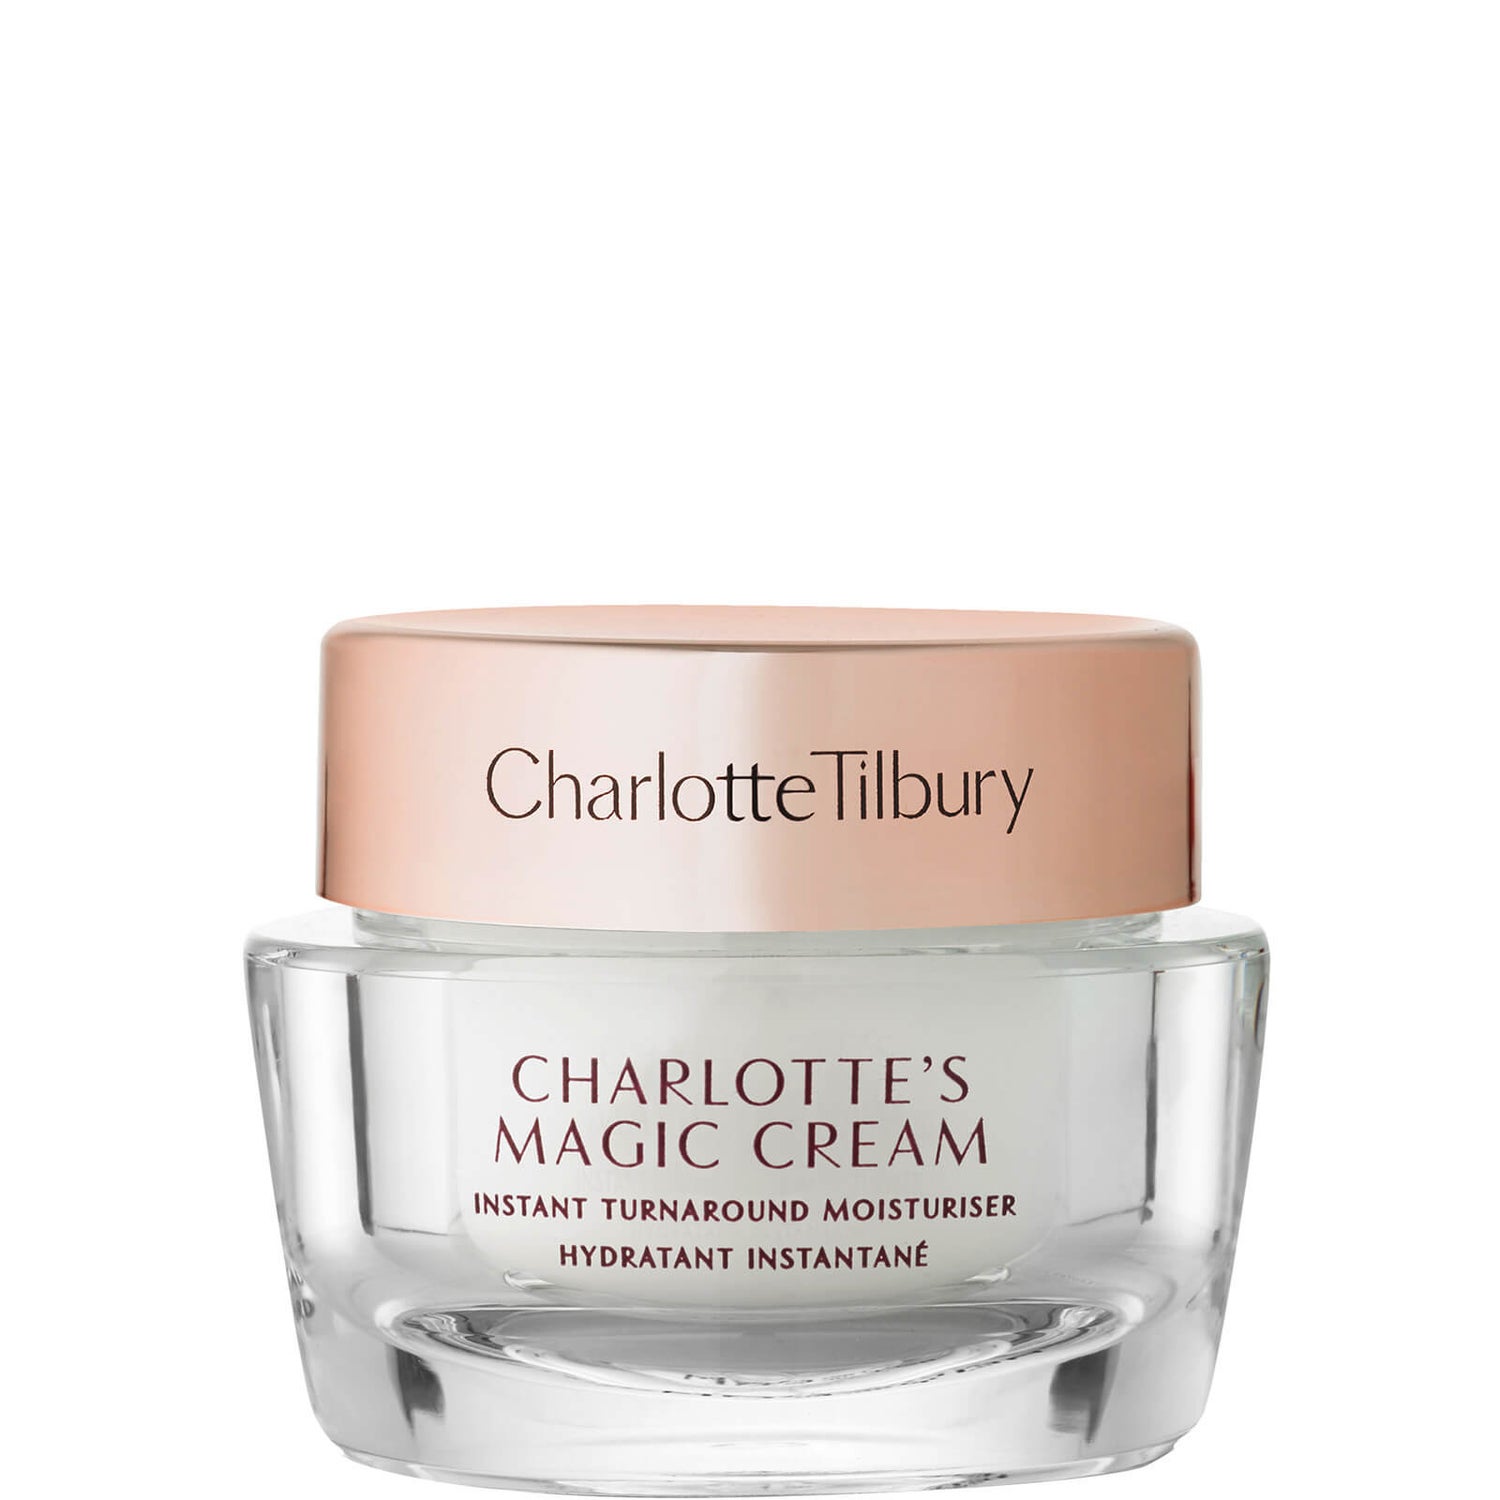 cultbeauty.com | CHARLOTTE TILBURY CHARLOTTE'S MAGIC CREAM MOISTURISER